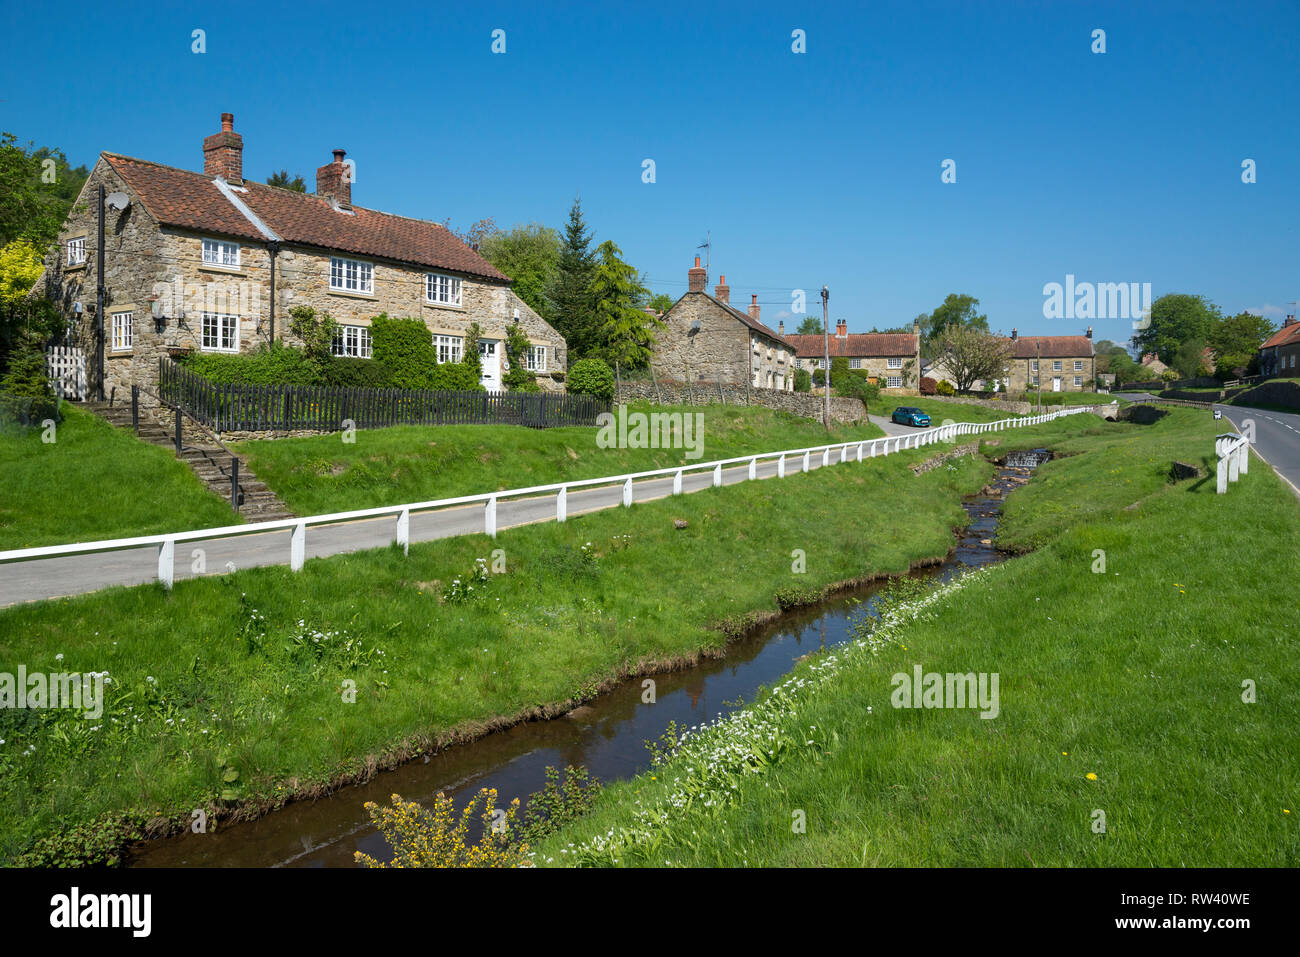 Das schöne Dorf Hutton-le-Hole in Ryedale, North Yorkshire, England. Stockfoto